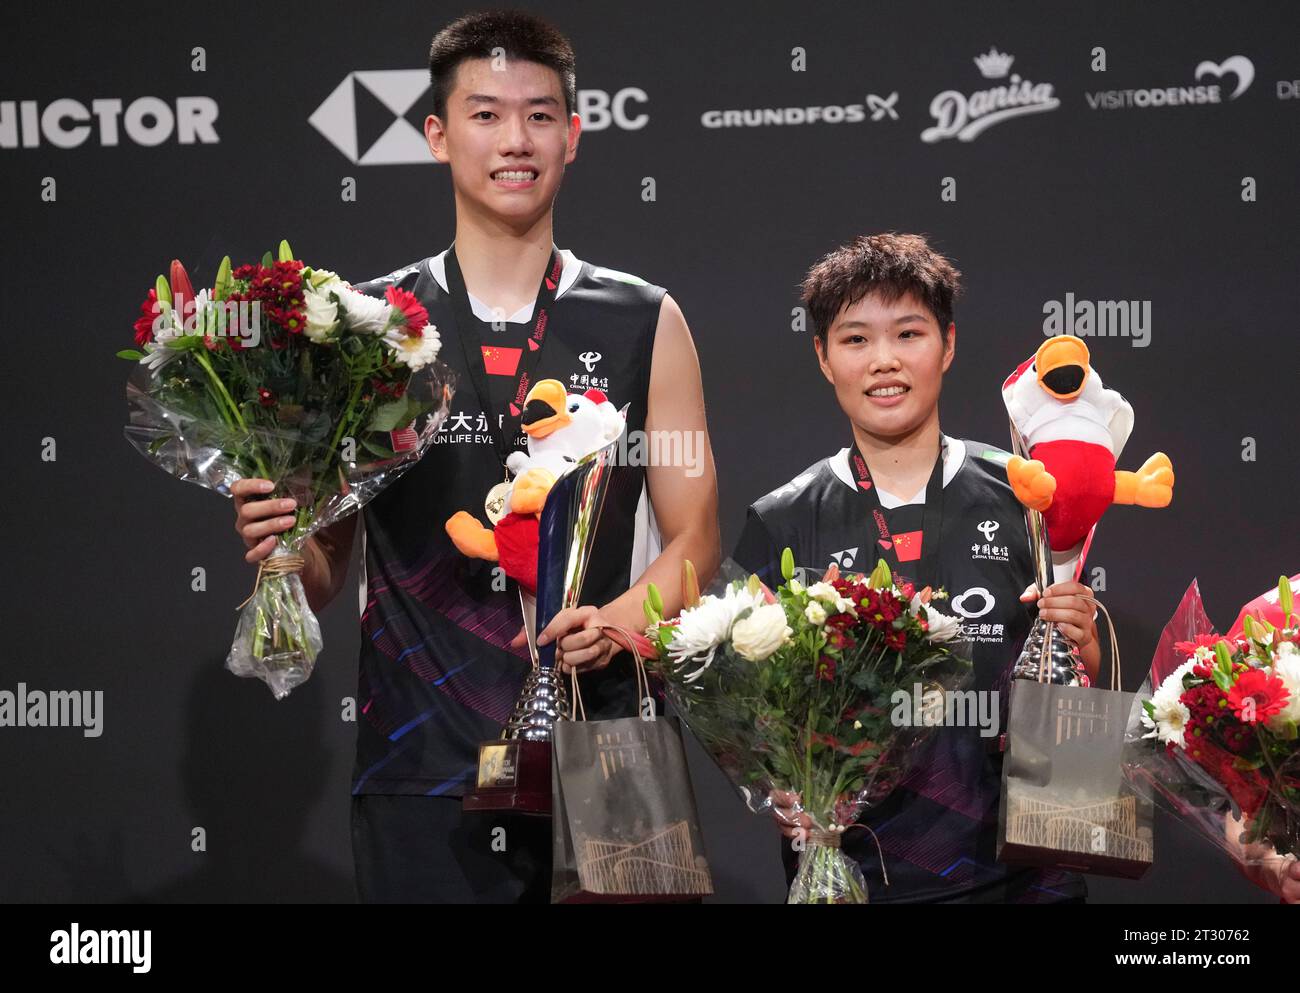 Feng Yan Zhe und Huang Dong Ping, China Sieger im gemischten Doppelpack bei Victor Denmark Open in der Jyske Bank Arena in Odense Sonntag 22, 2023. Stockfoto